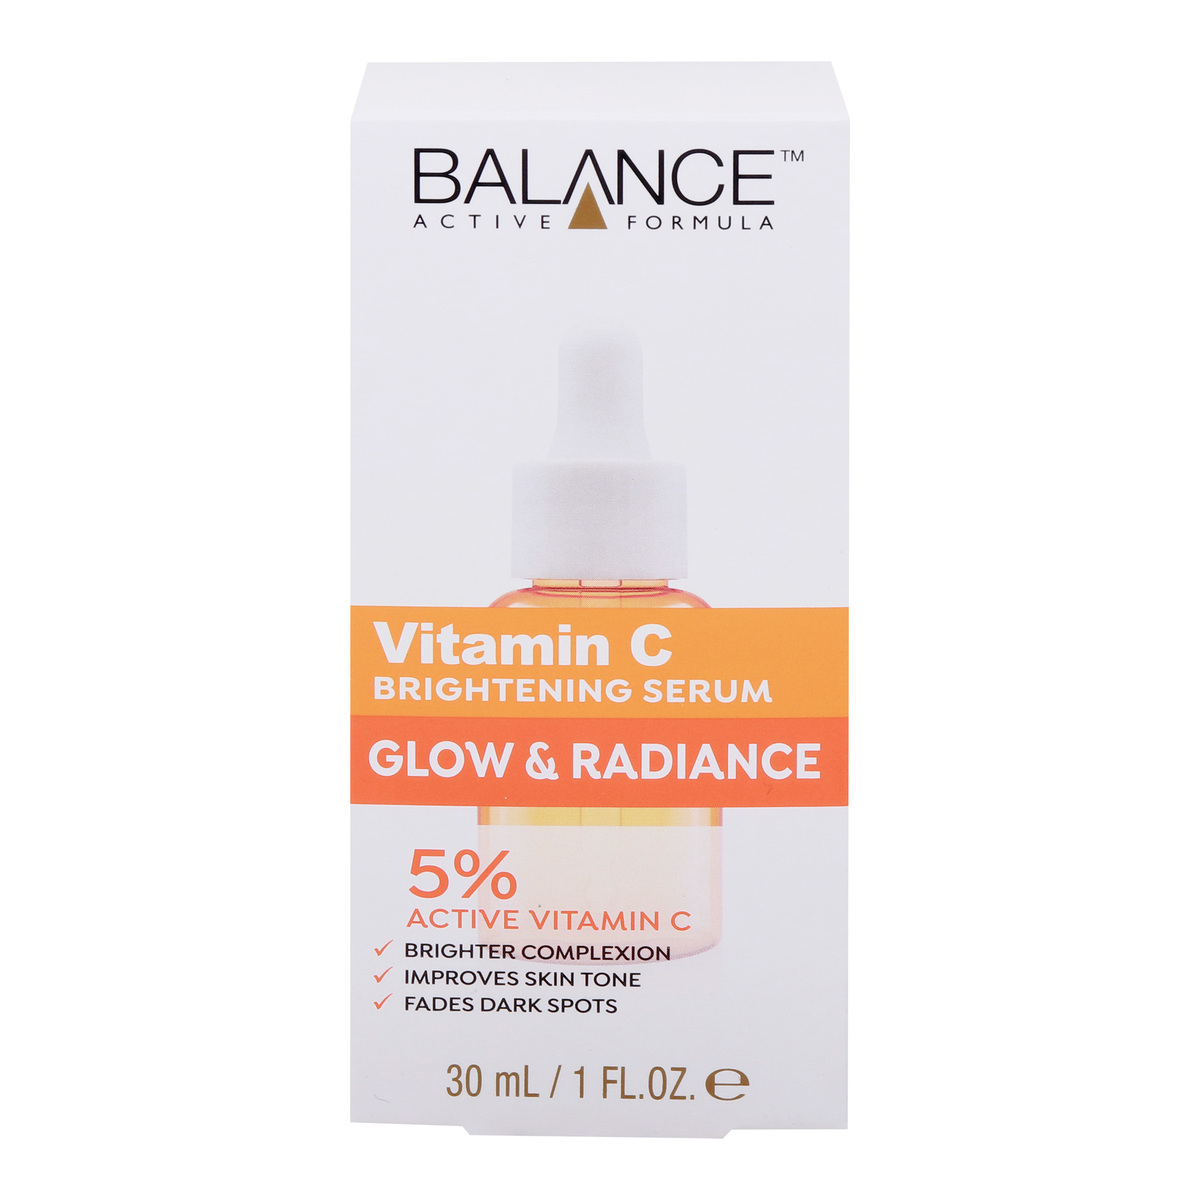 Balance Active Formula Glow & Radiance Vitamin C Brightening Serum 30 ml